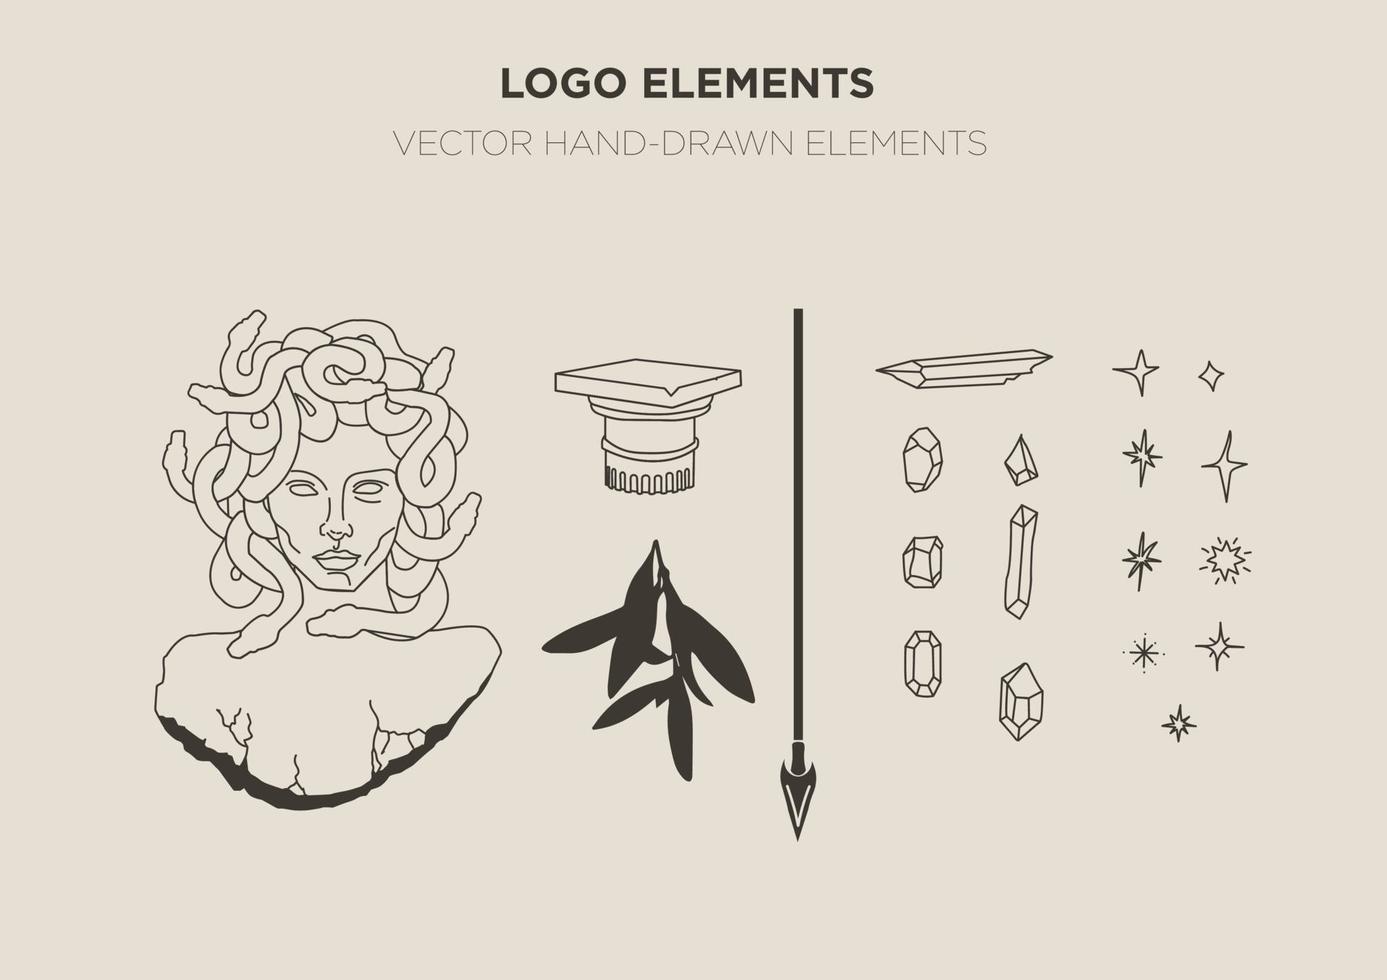 conjunto de elementos de design de logotipo boho vetor